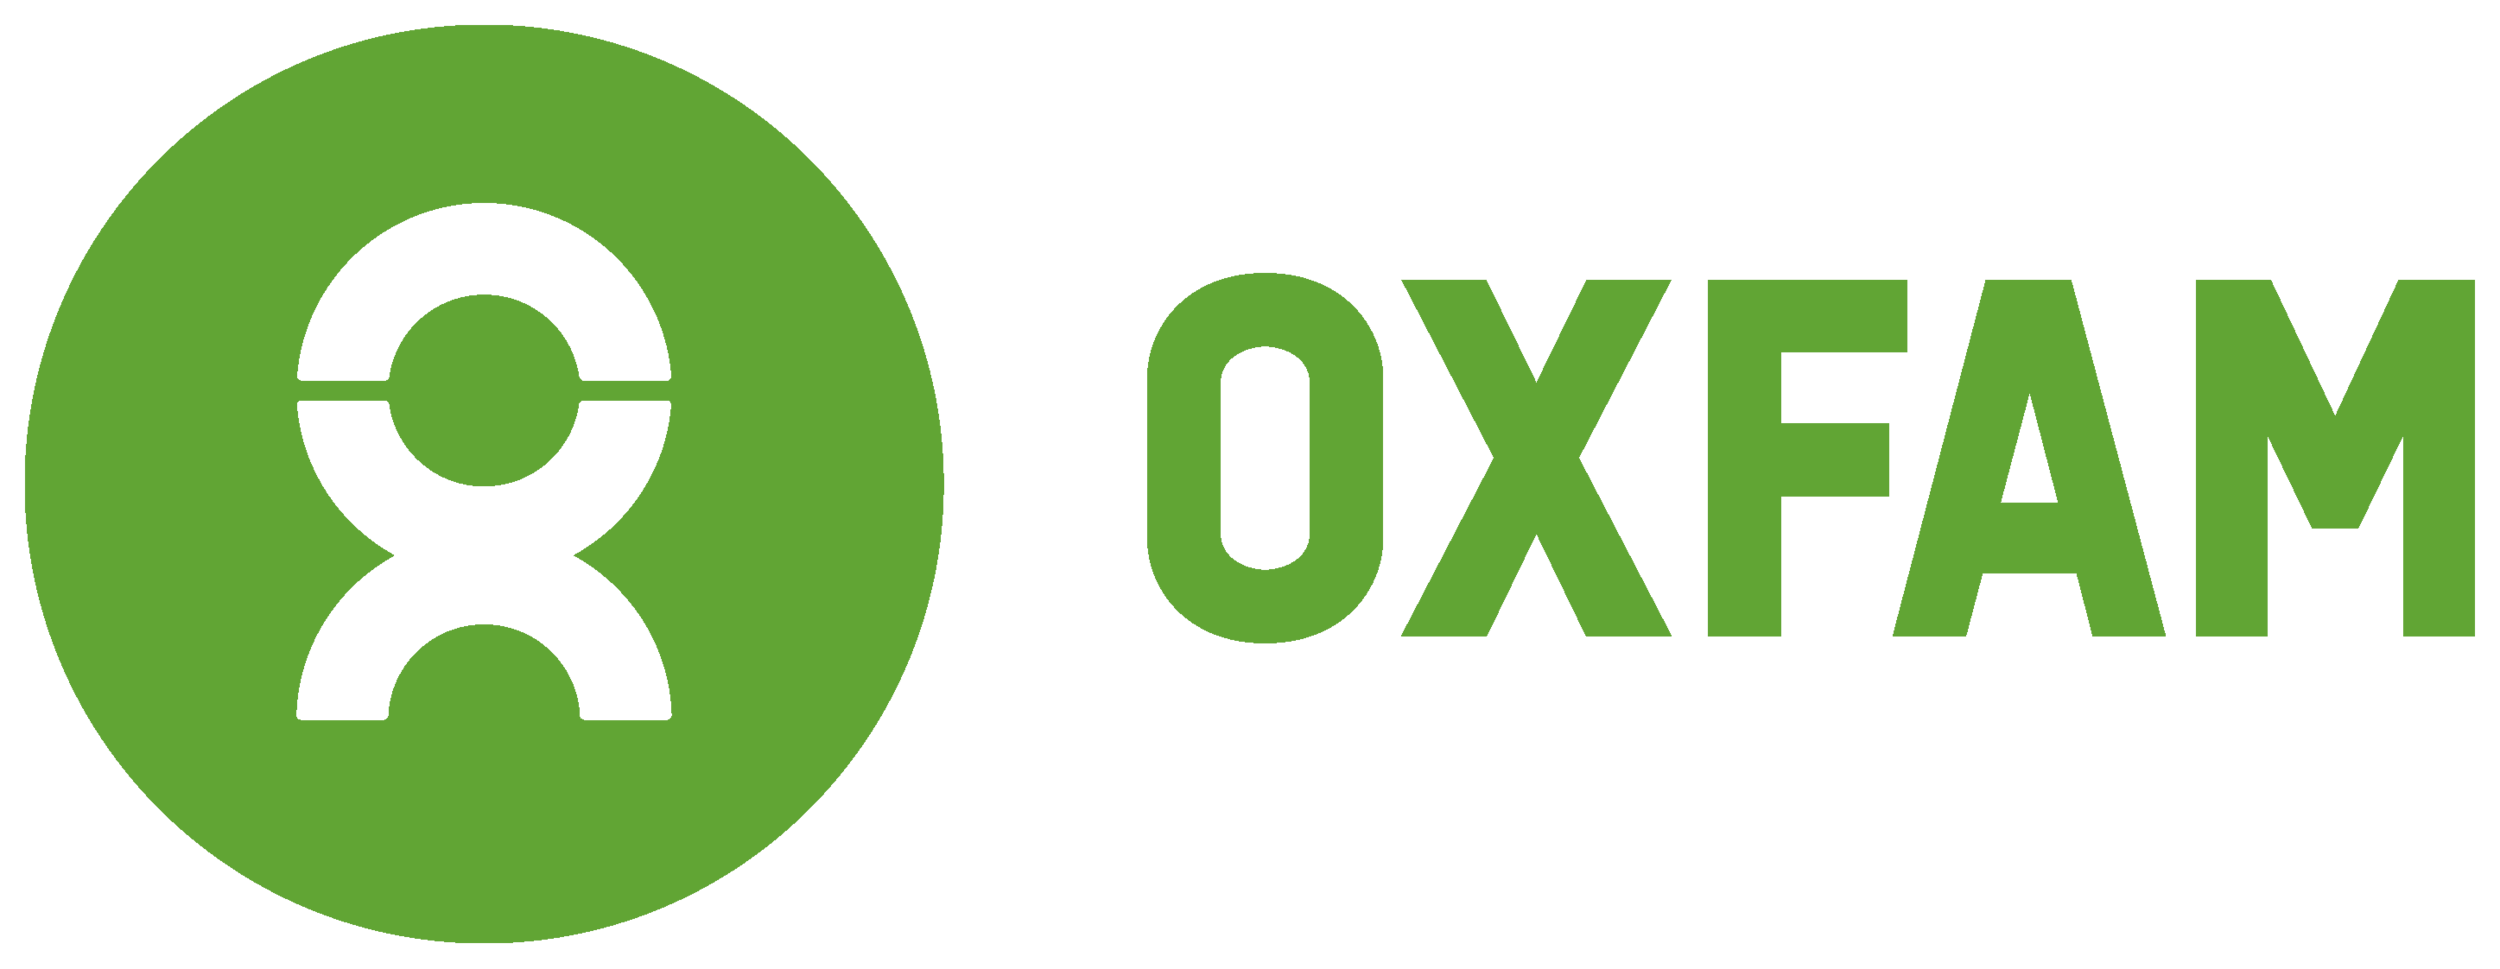 oxfam_logo_horizontal_green_rgb.png